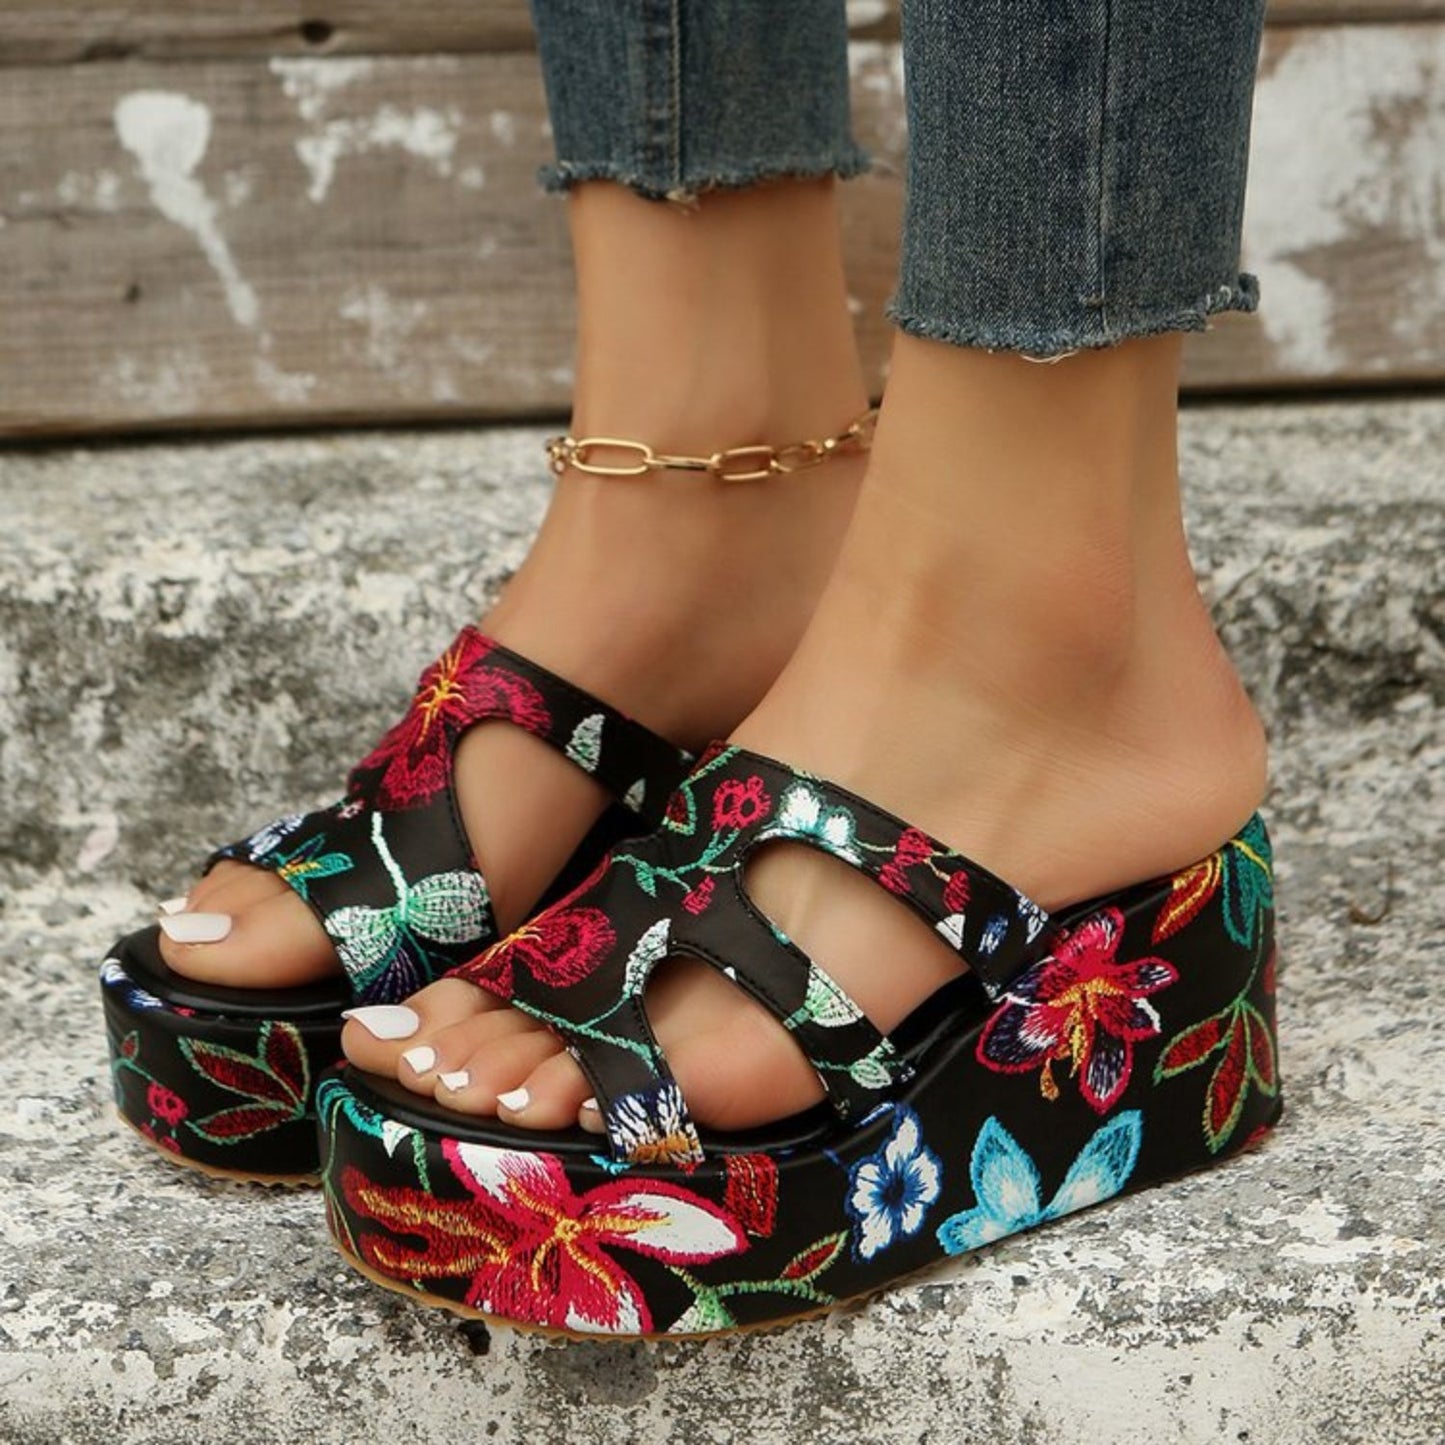 Cutout Floral Peep Toe Sandals - OMG! Rose